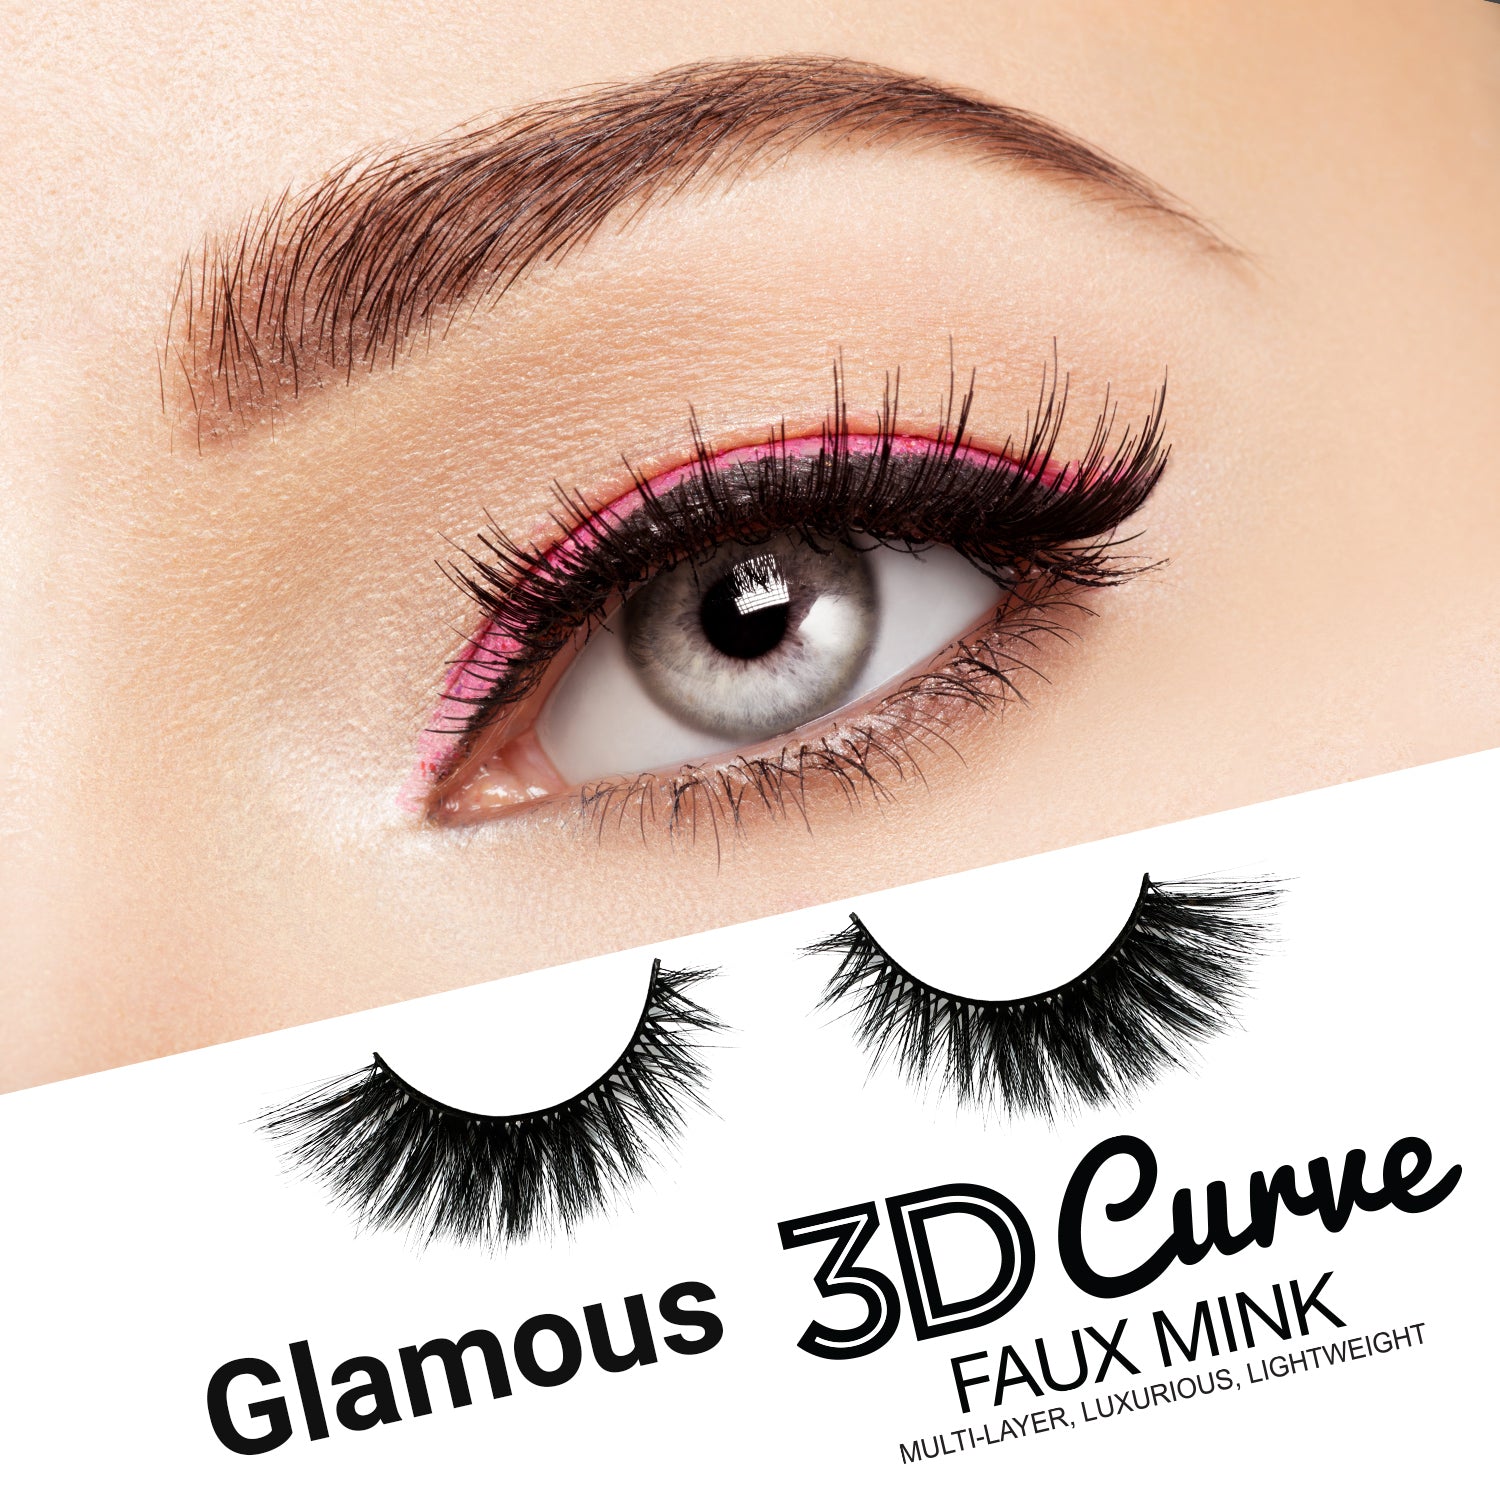 Instant Fab 3D Curve Faux Mink Eyelashes (Glamour)